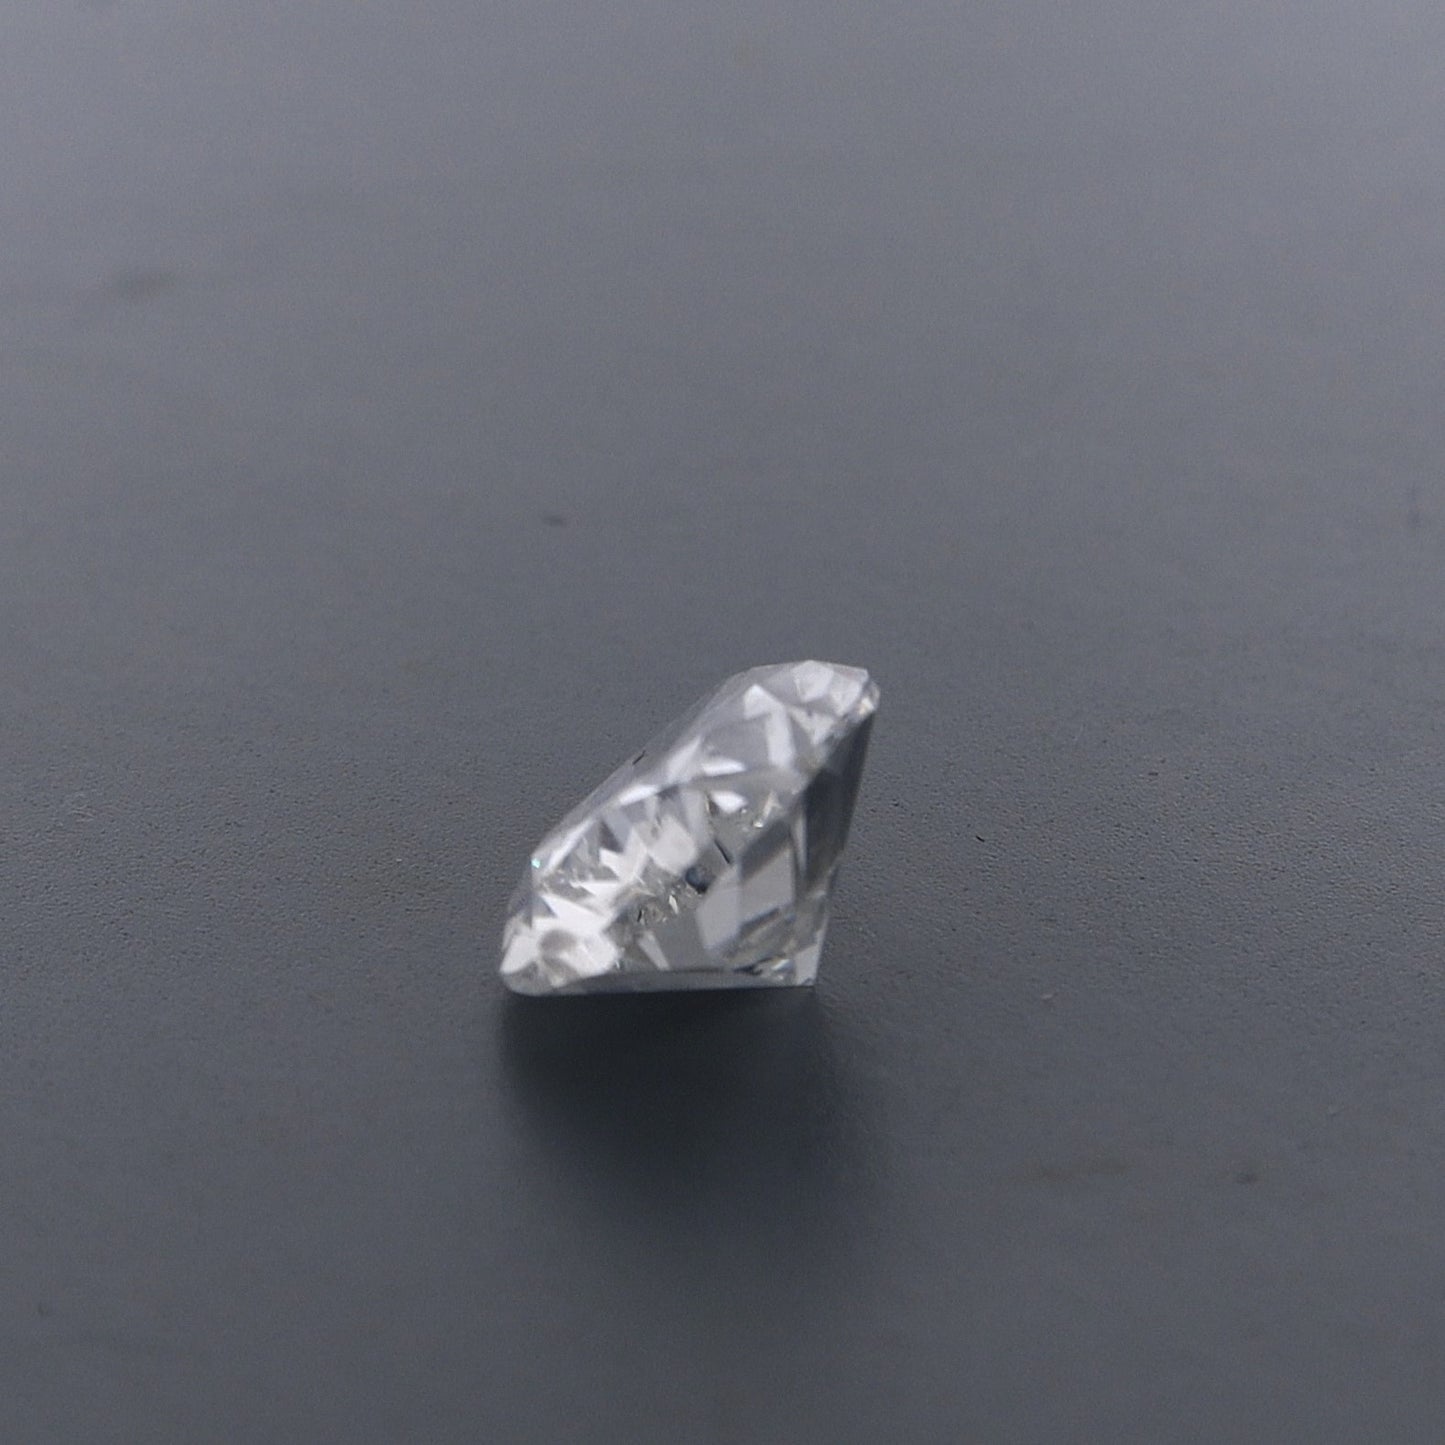 Pear 3.01ct GI1 Diamond with GIA Certification